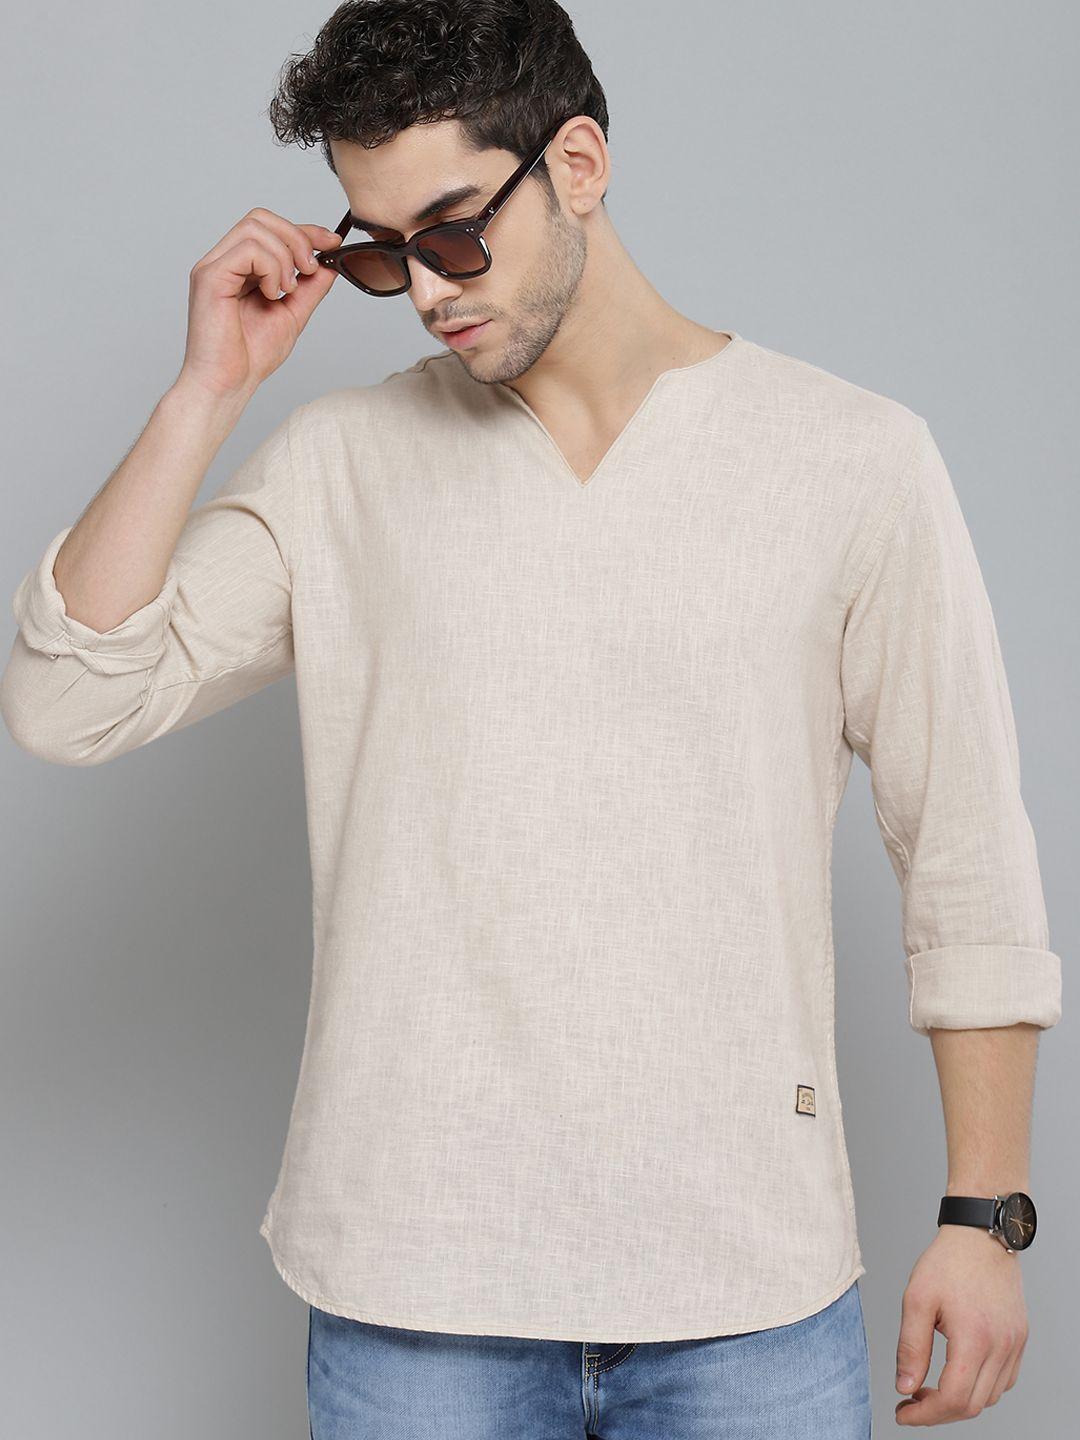 dennison-men-beige-comfort-fit-solid-shirt-style-kurta